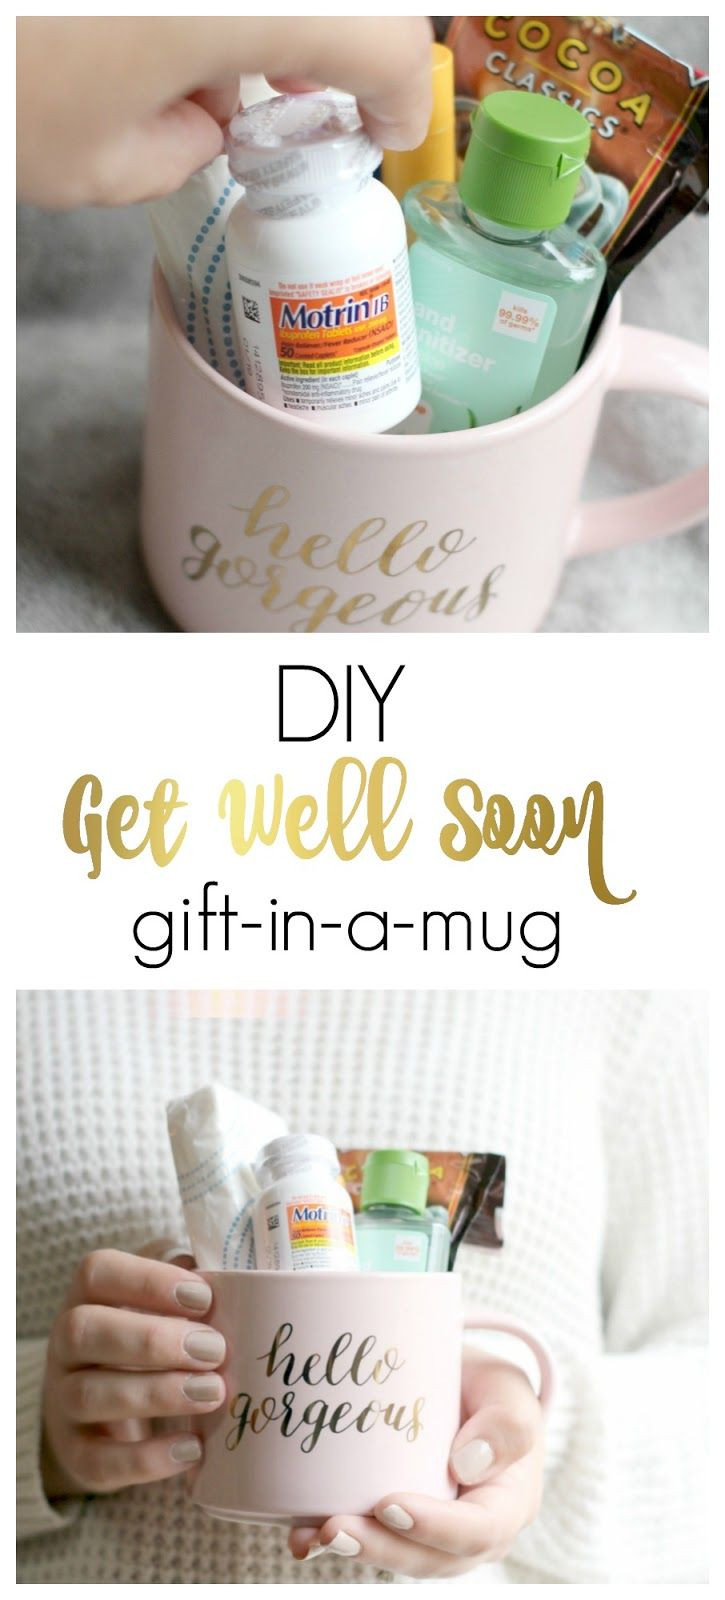 DIY Get Well Gifts
 DIY Get Well Soon "Gift in a Mug"